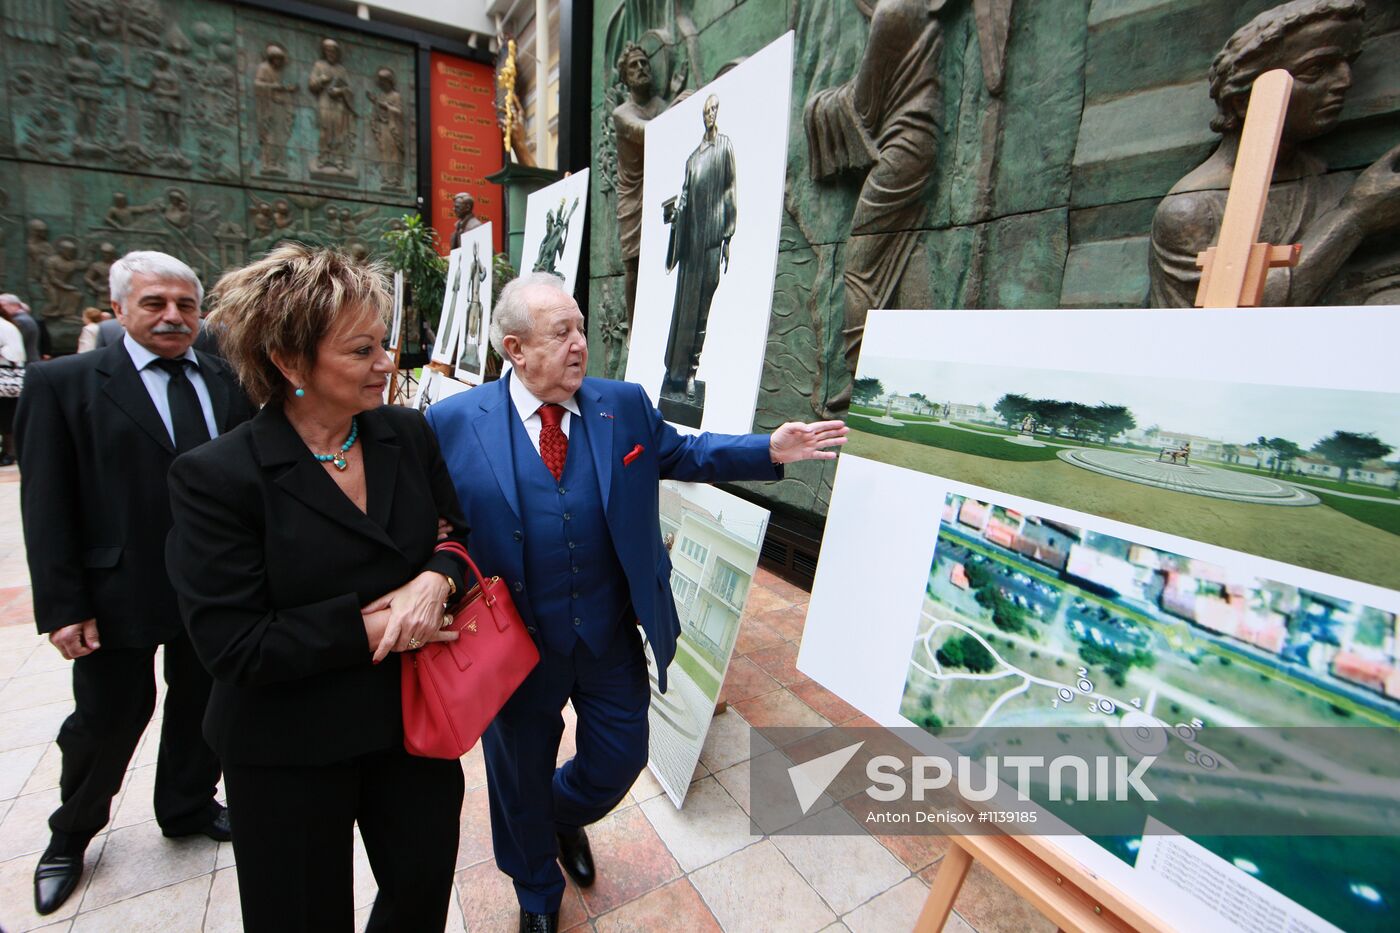 Zurab Tsereteli presents monument to Marina Tsvetaeva in Moscow